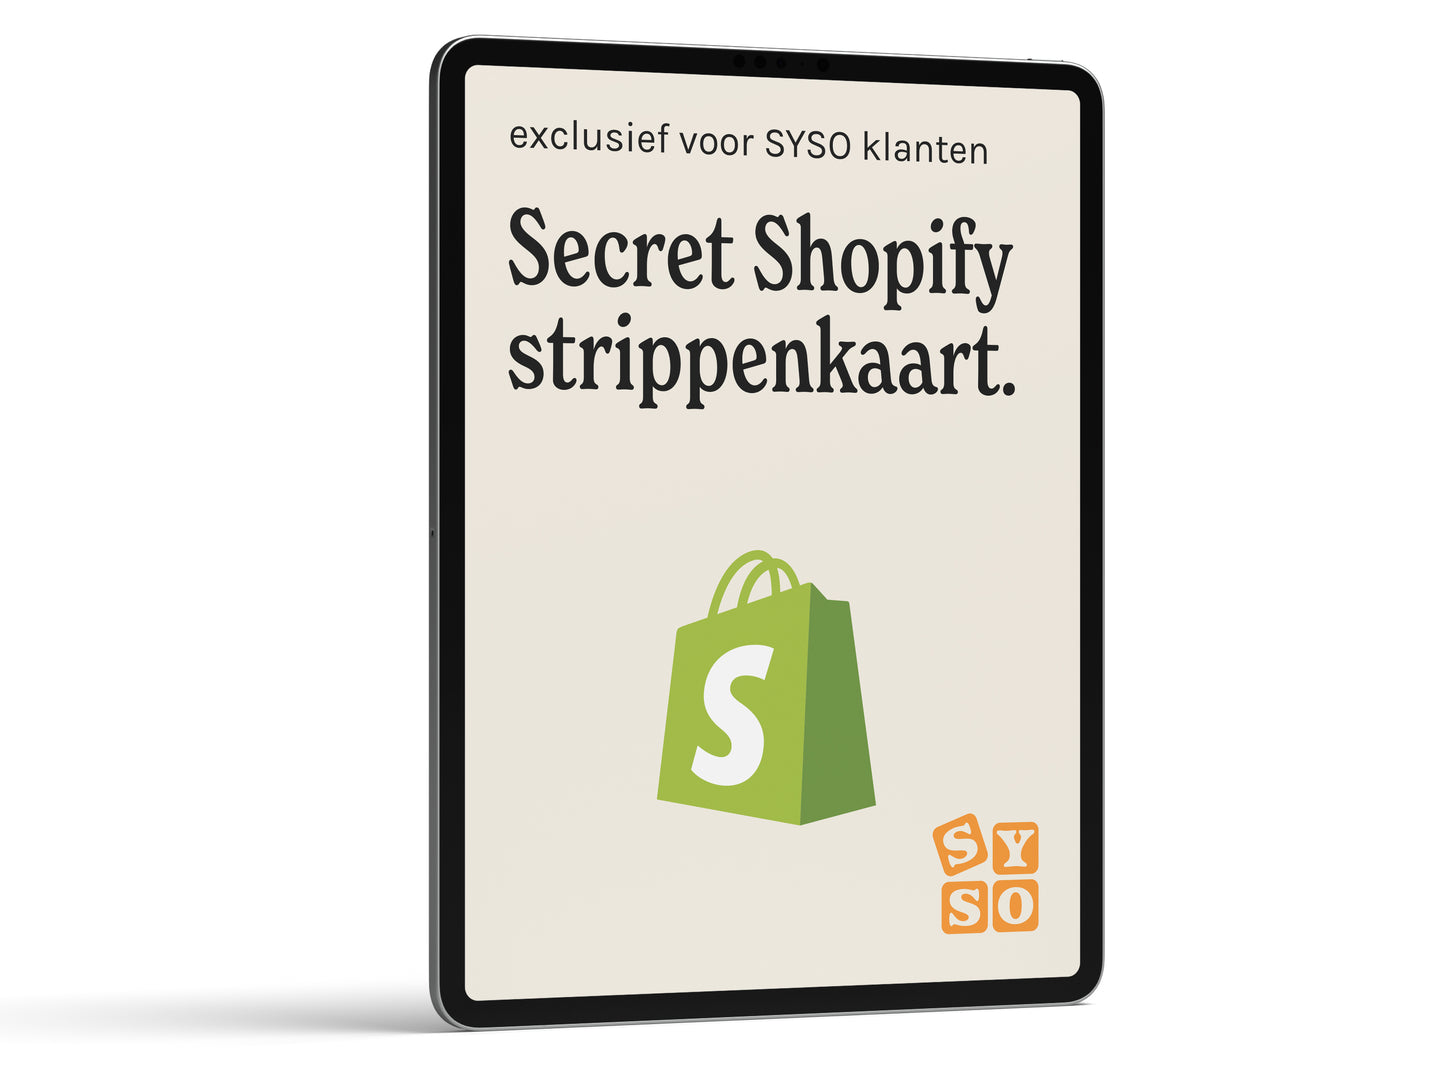 Secret Shopify strippenkaart - Sell your stuff online